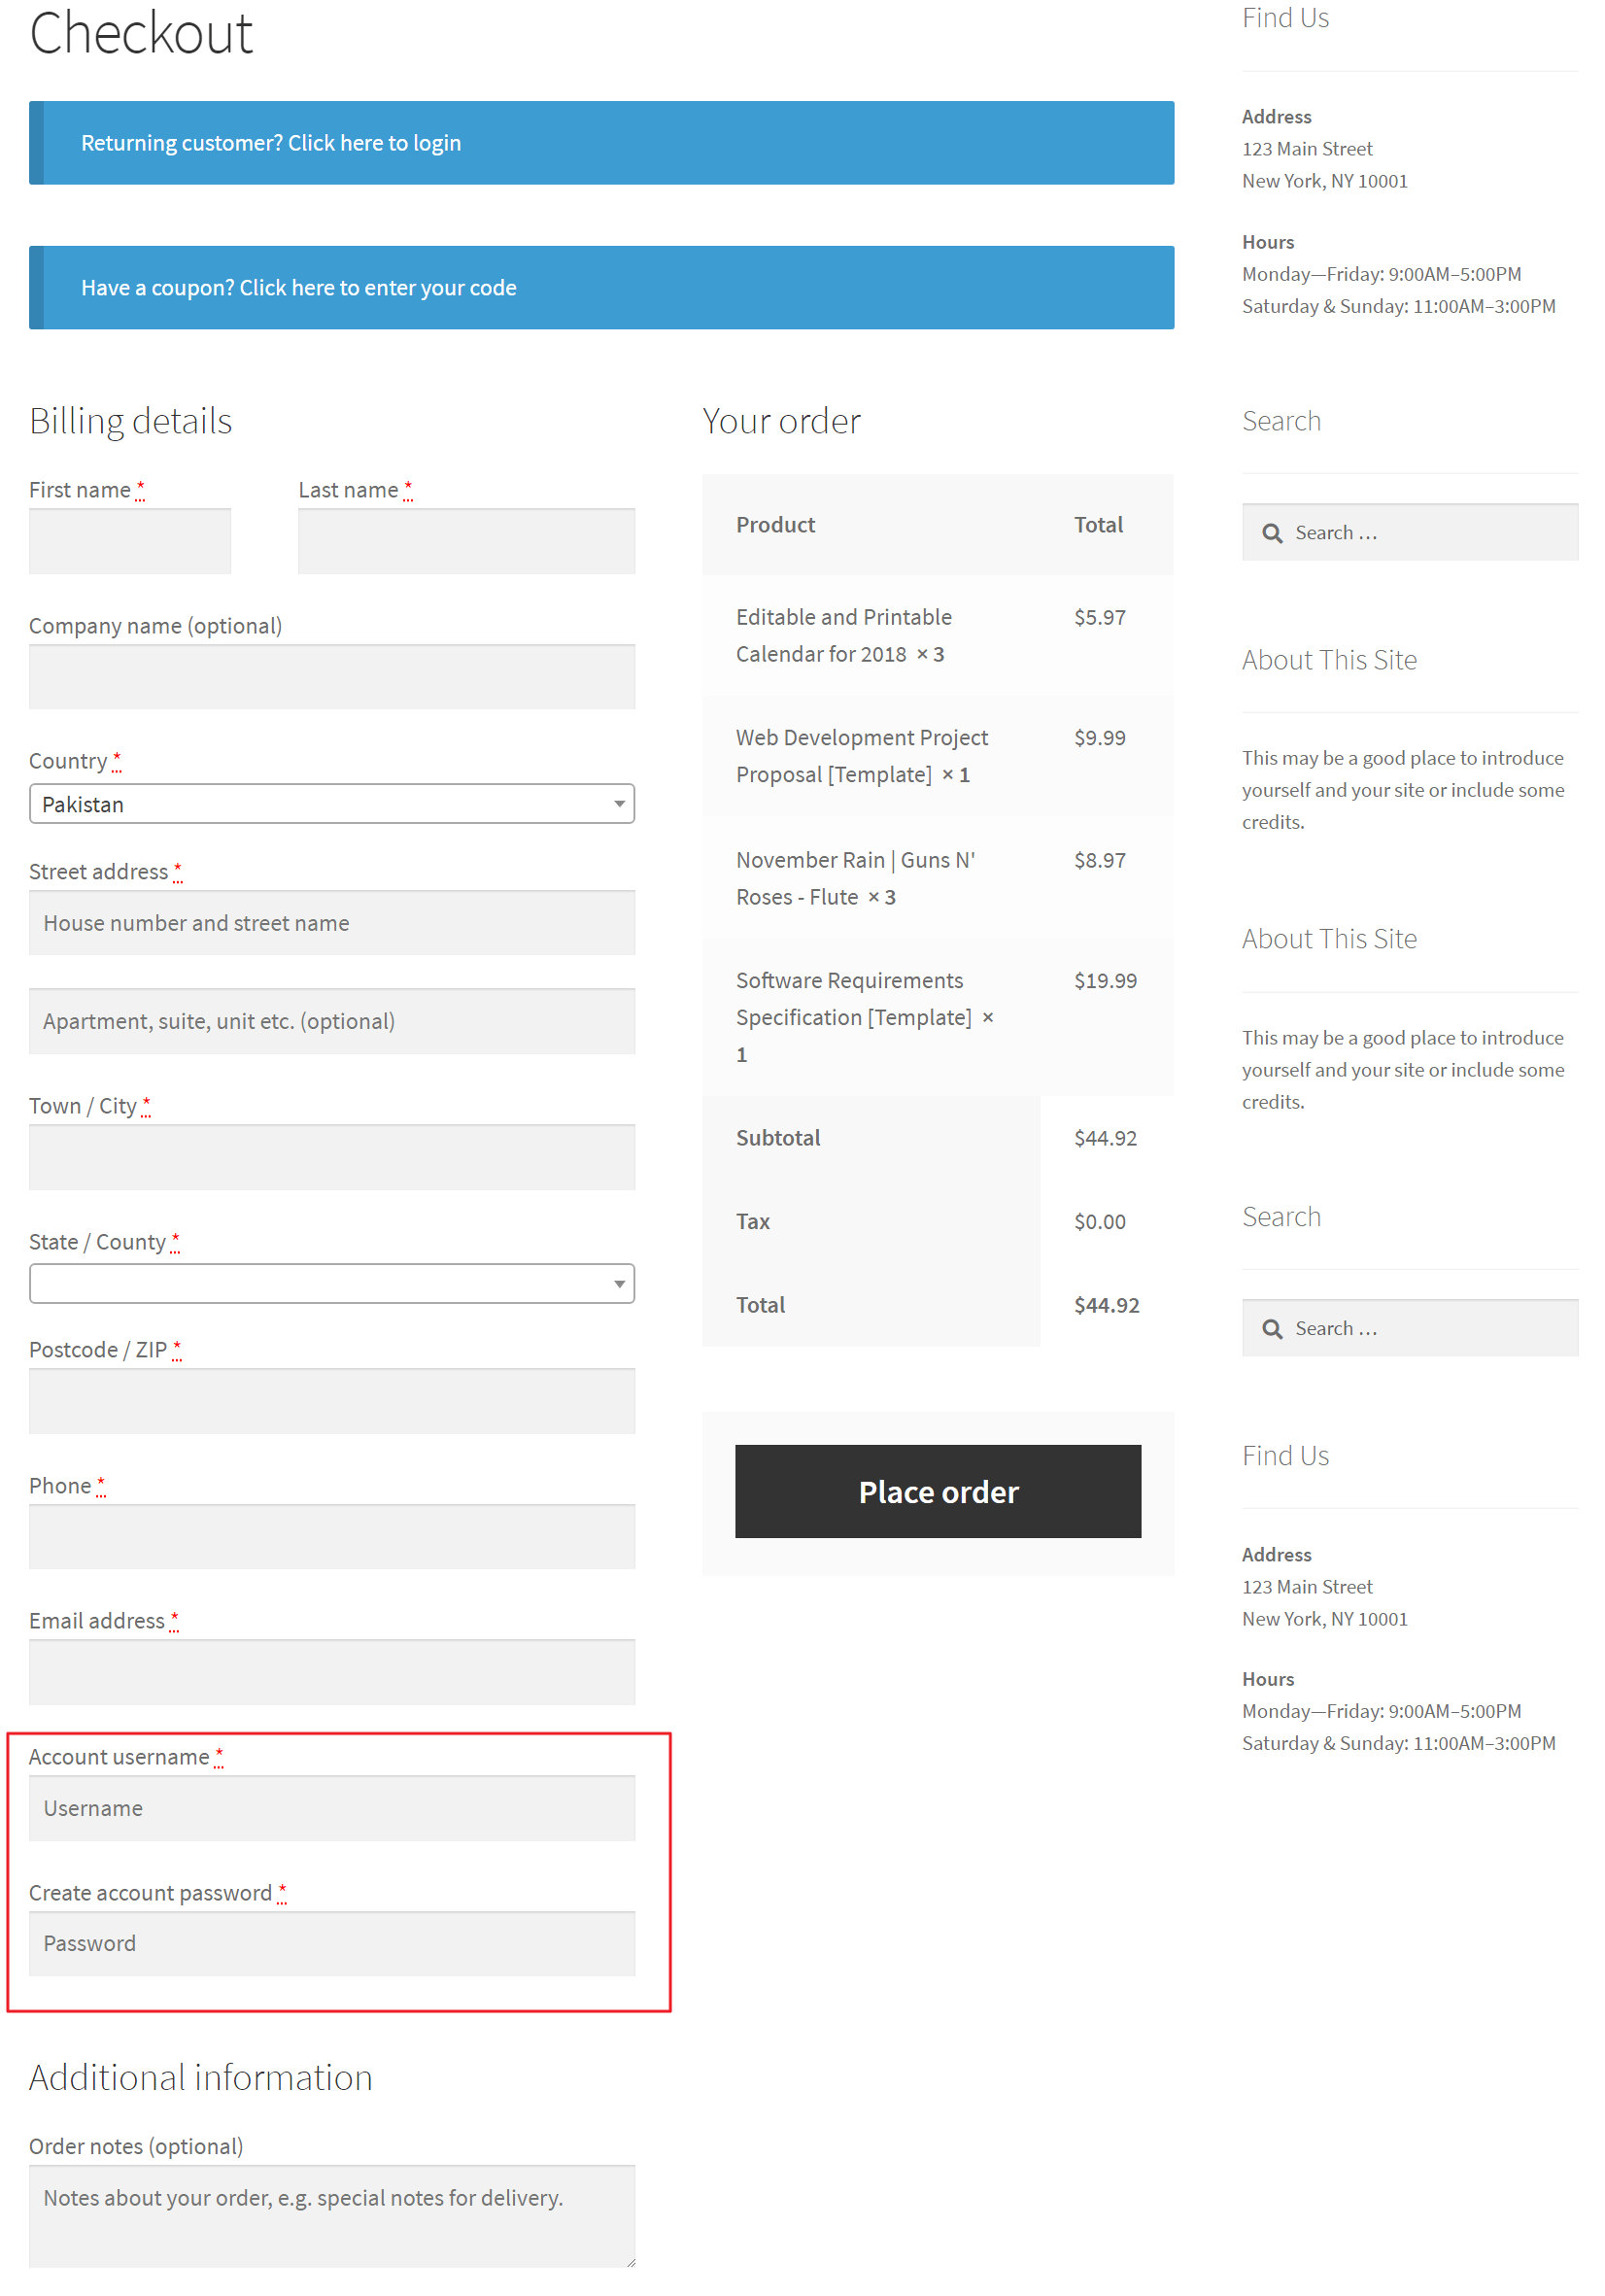 Registration Form to WooCommerce